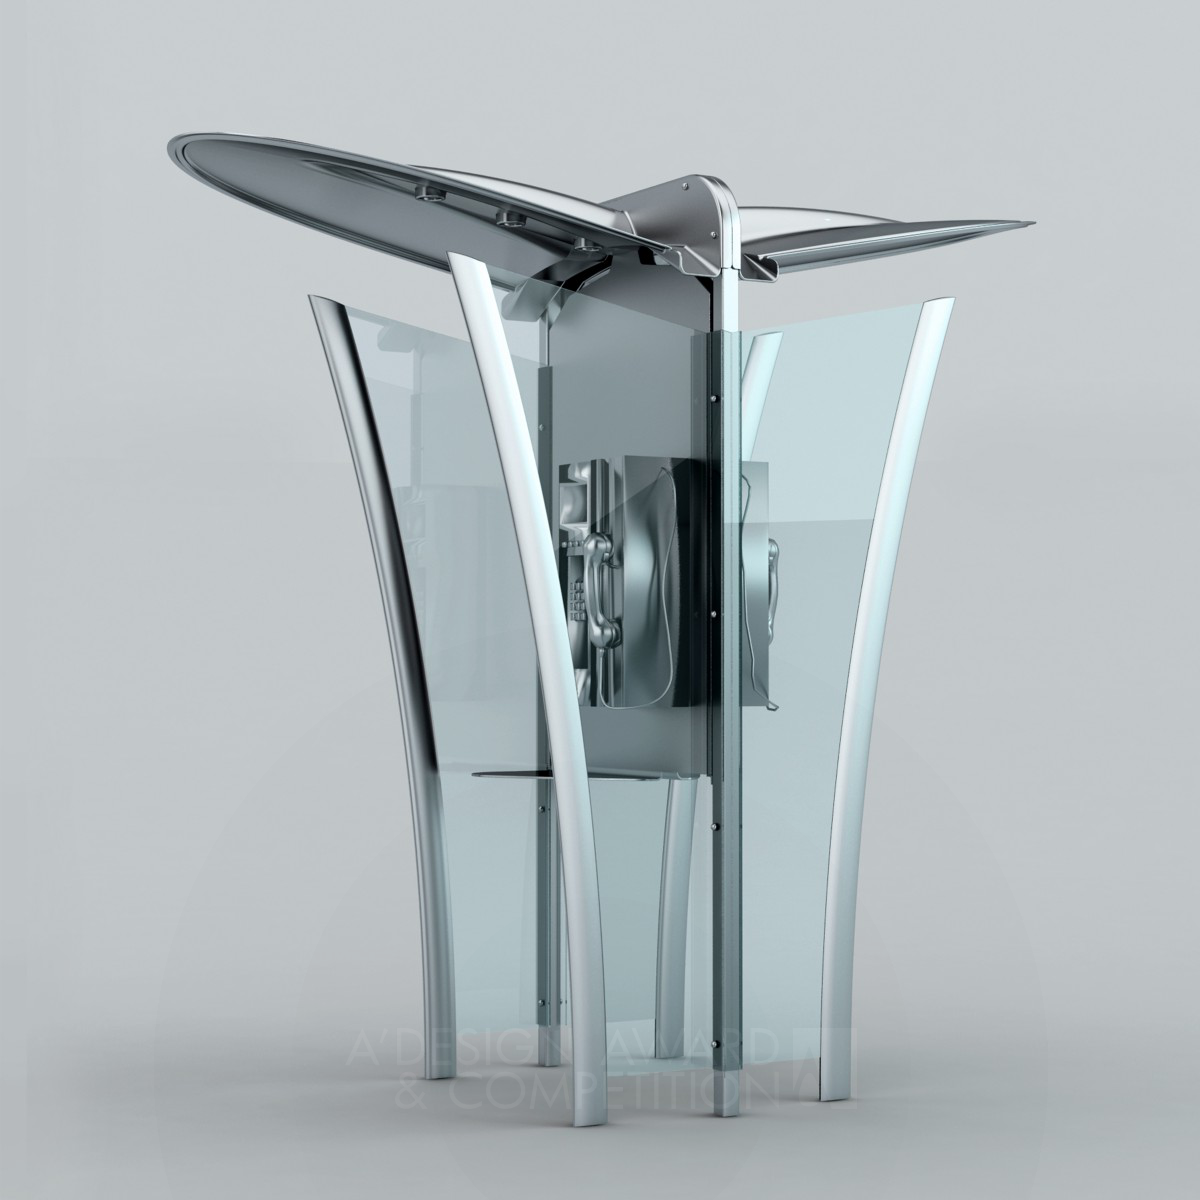 Phone Box Public Phone by Hakan Gürsu Silver Street Furniture Design Award Winner 2014 